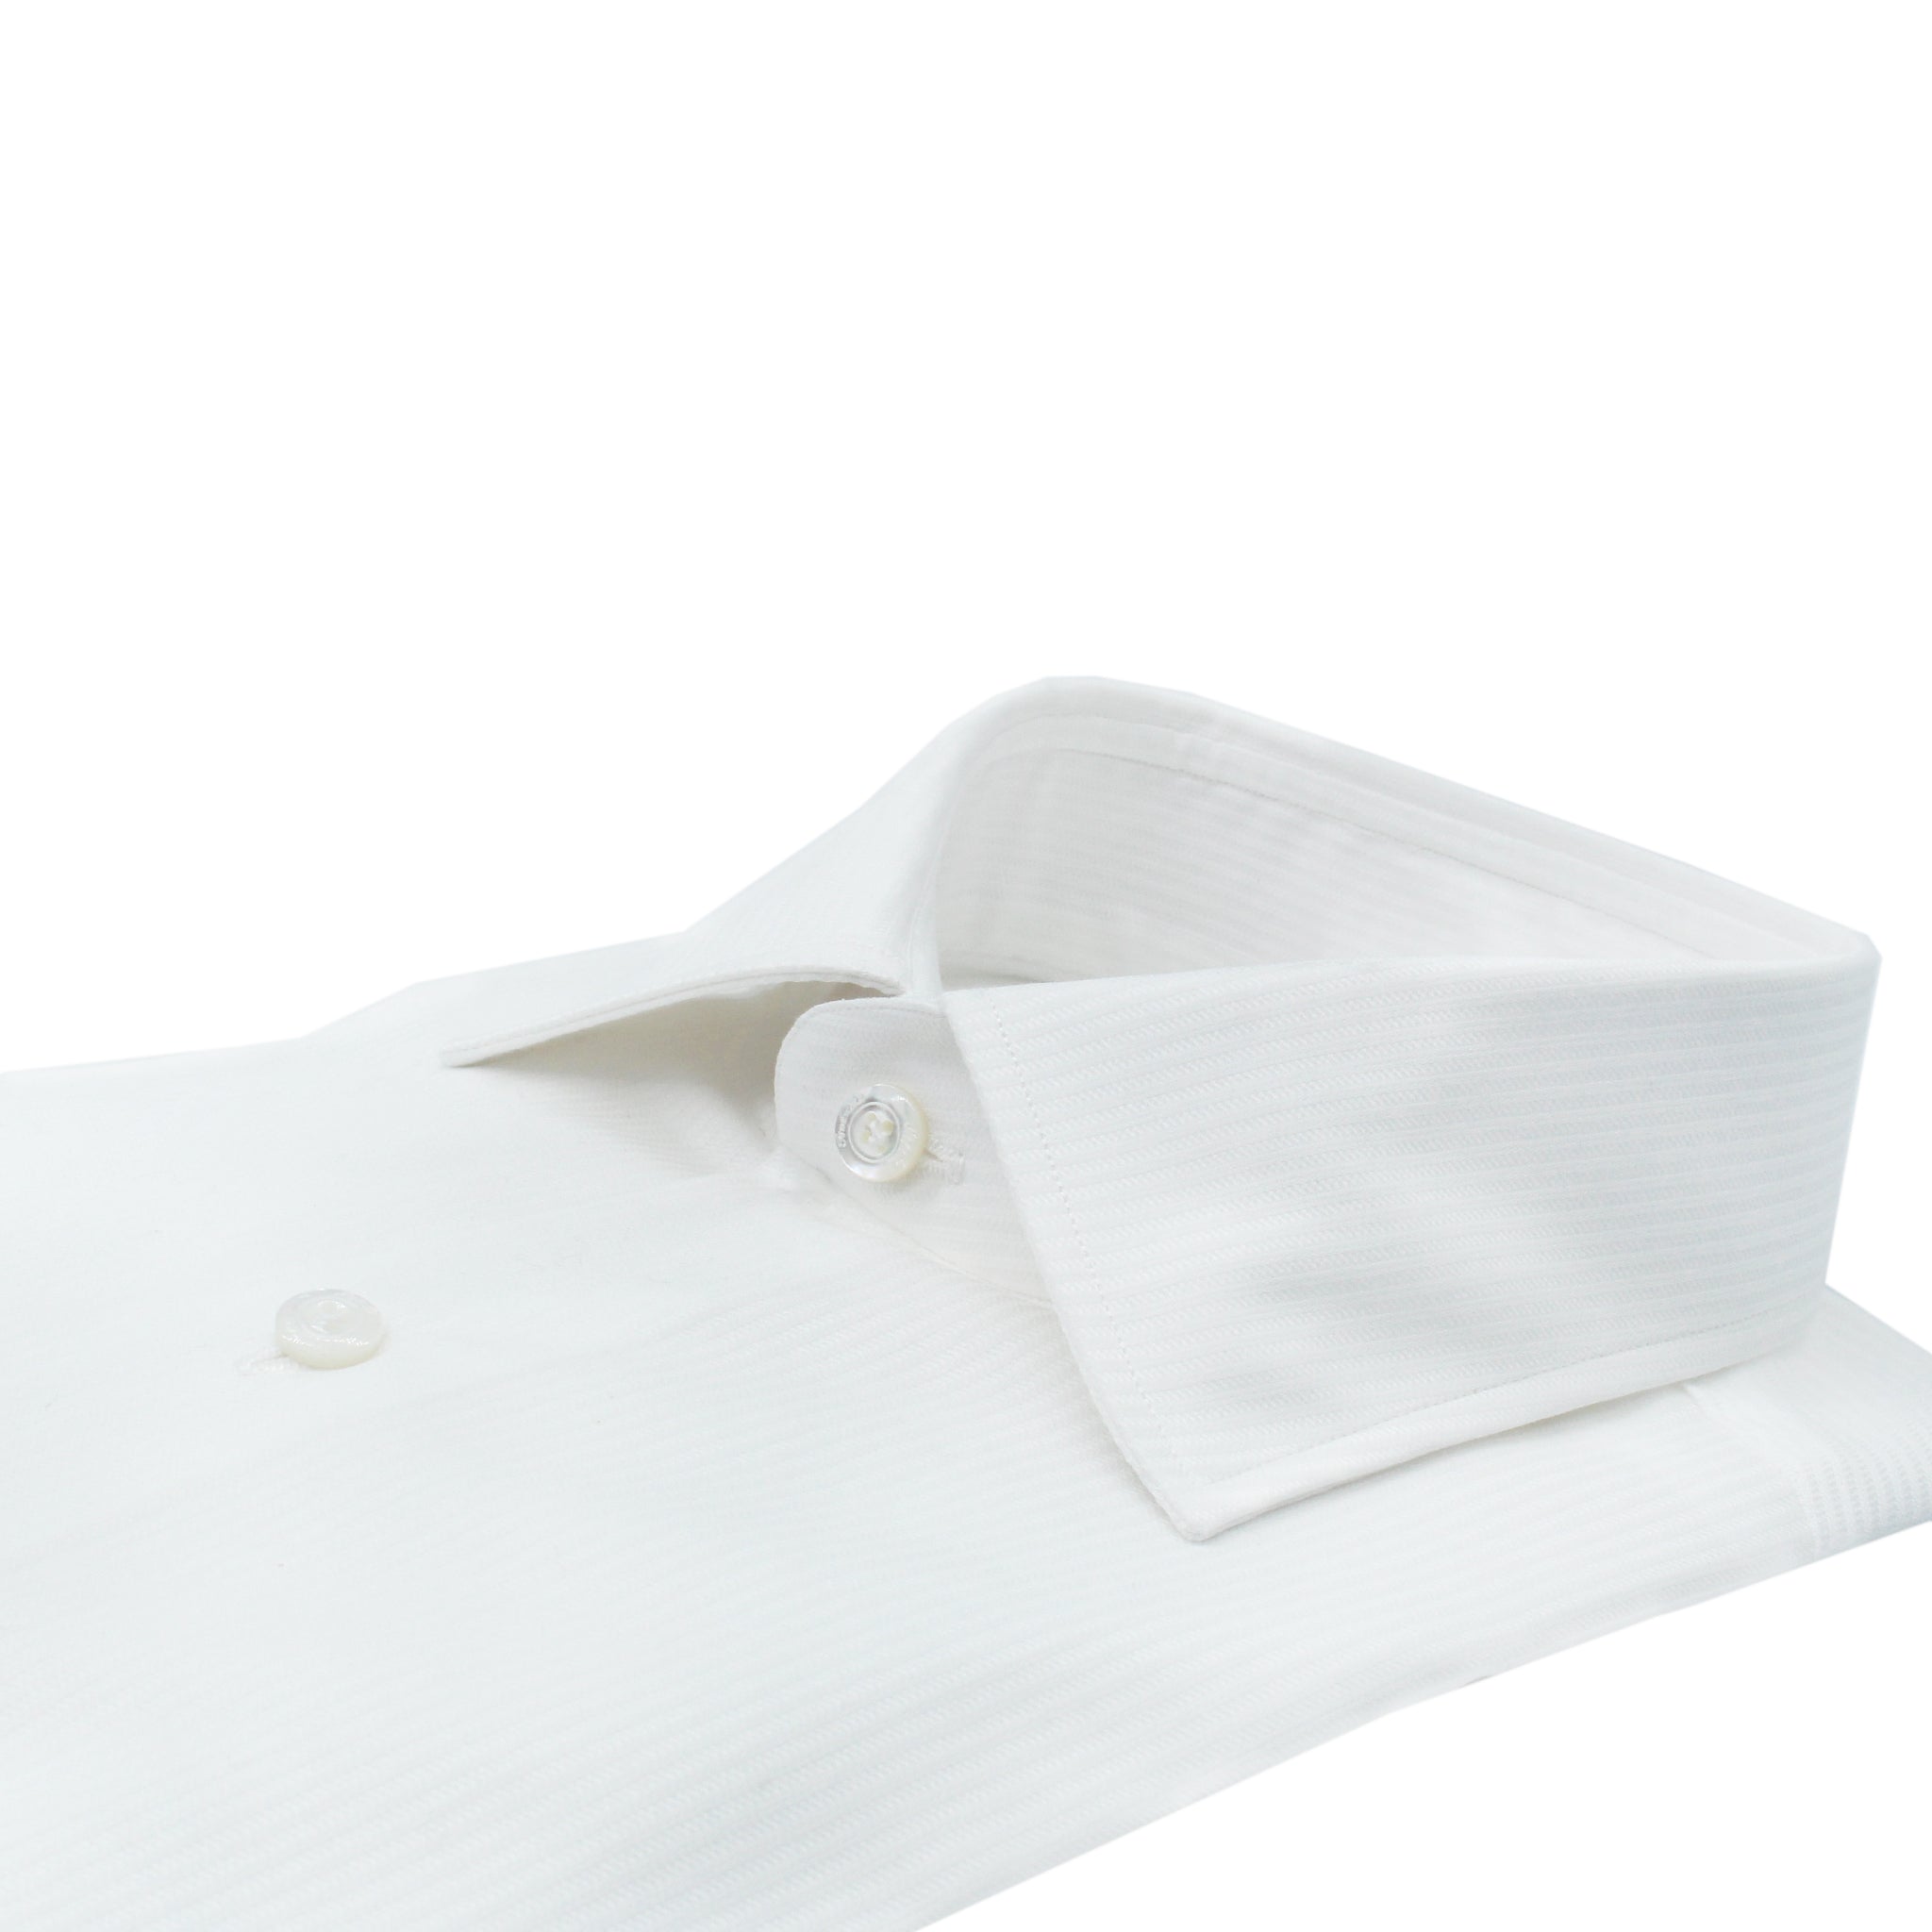 Classic Napoli white stretch cotton shirt Fake cufflinks